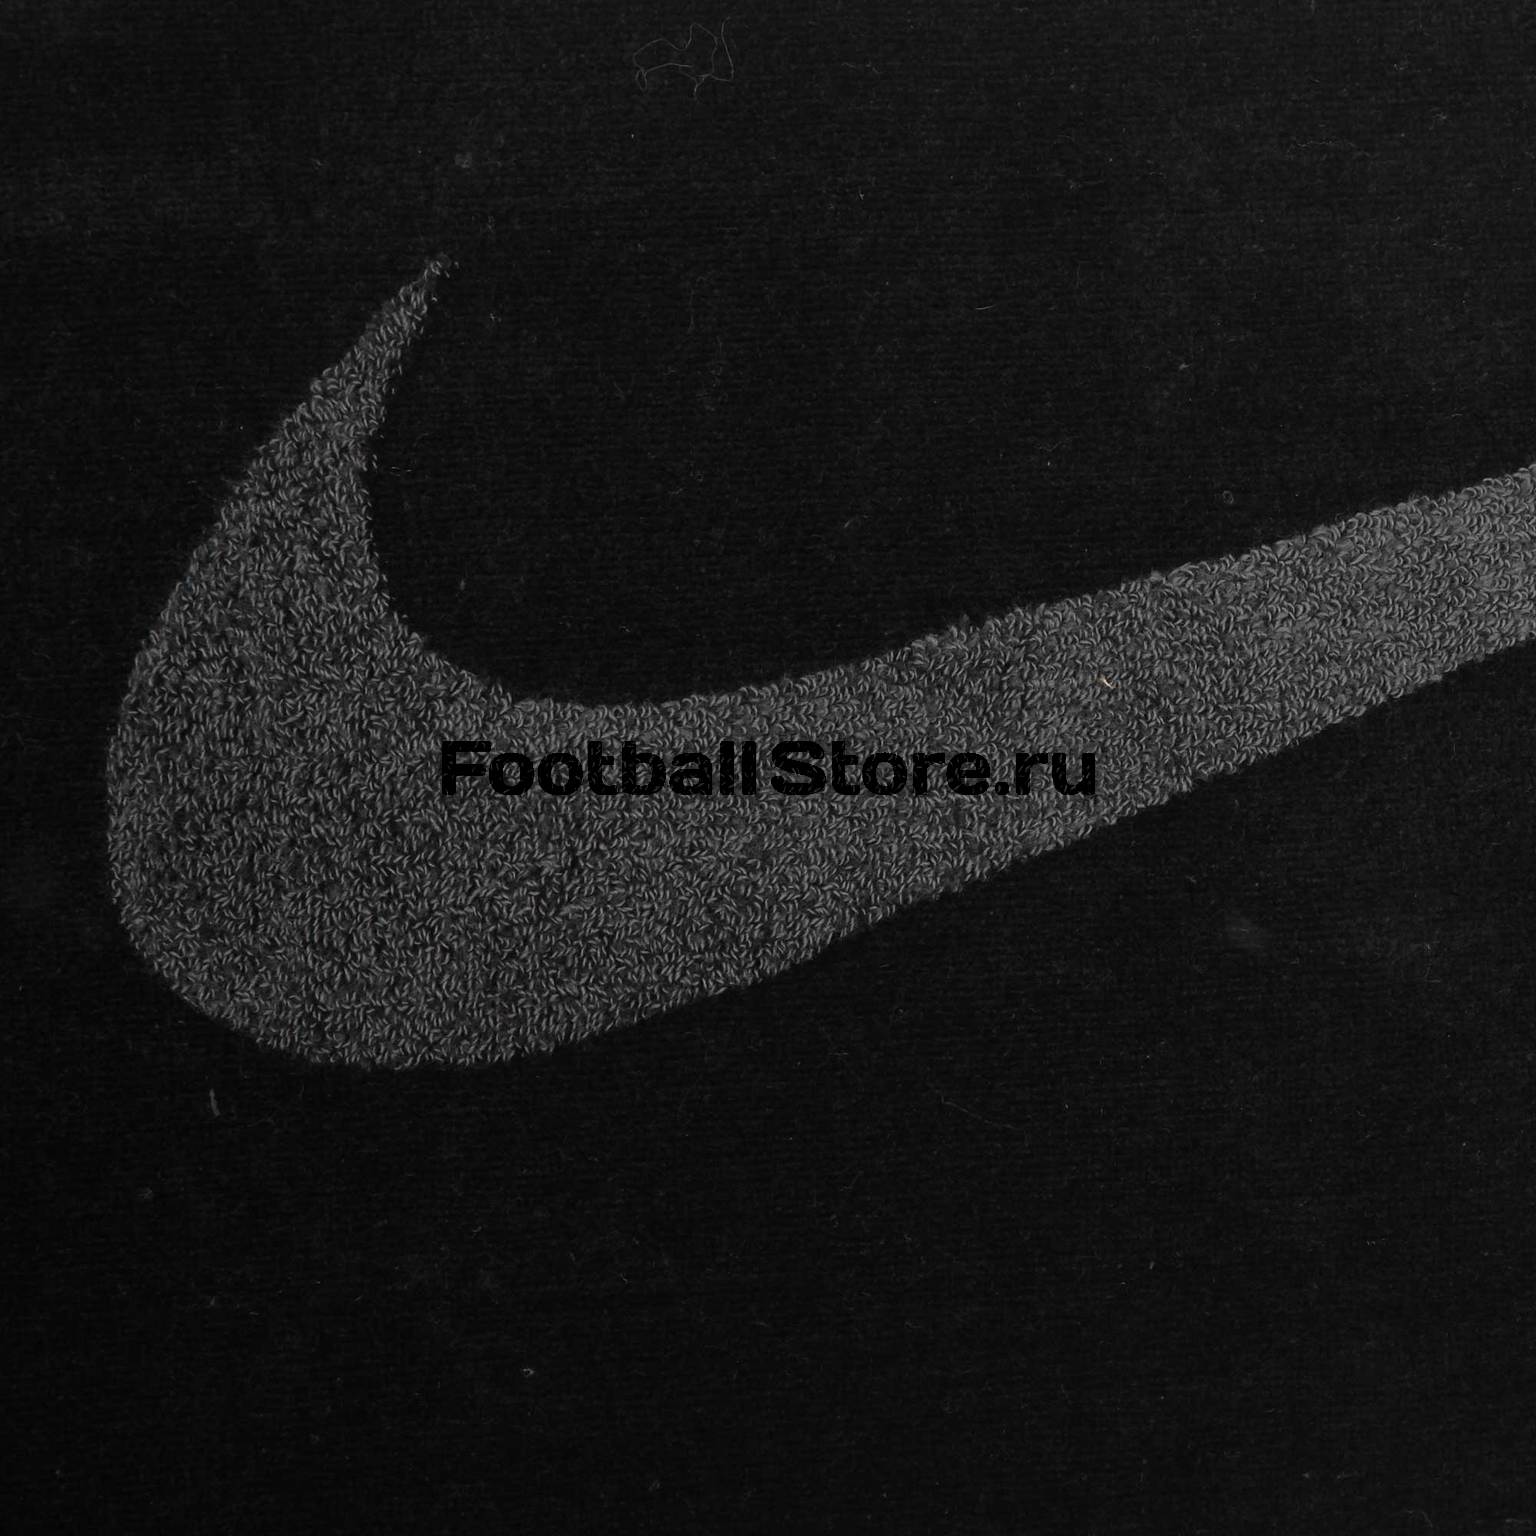 Полотенце Nike Sport Towel N.ET.13.046.LG